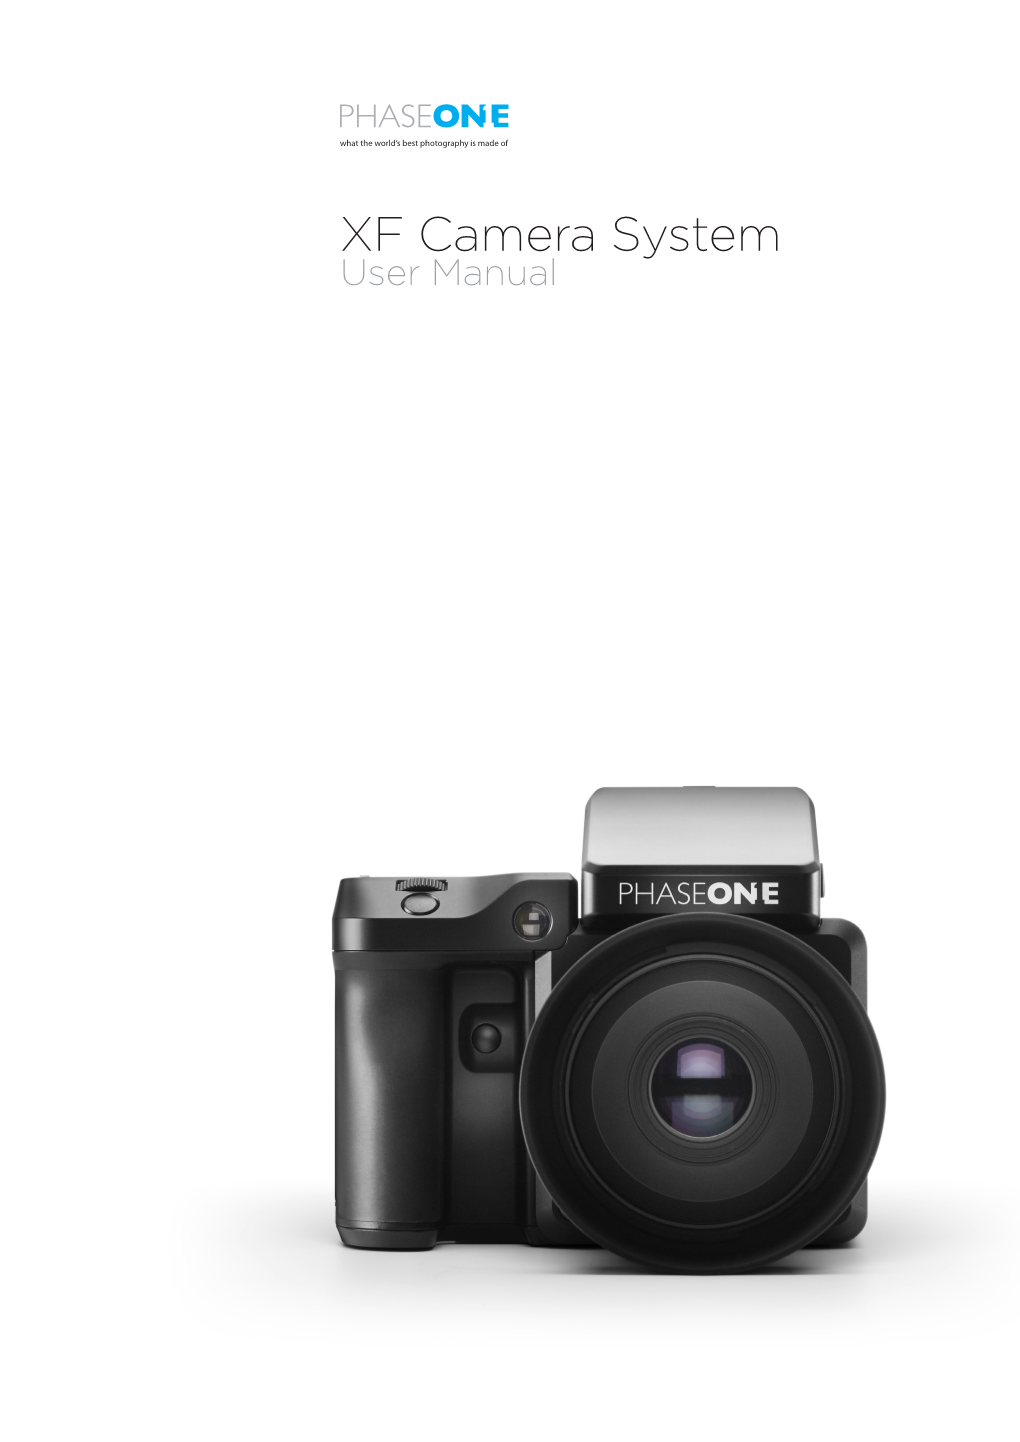 XF Camera System User Manual